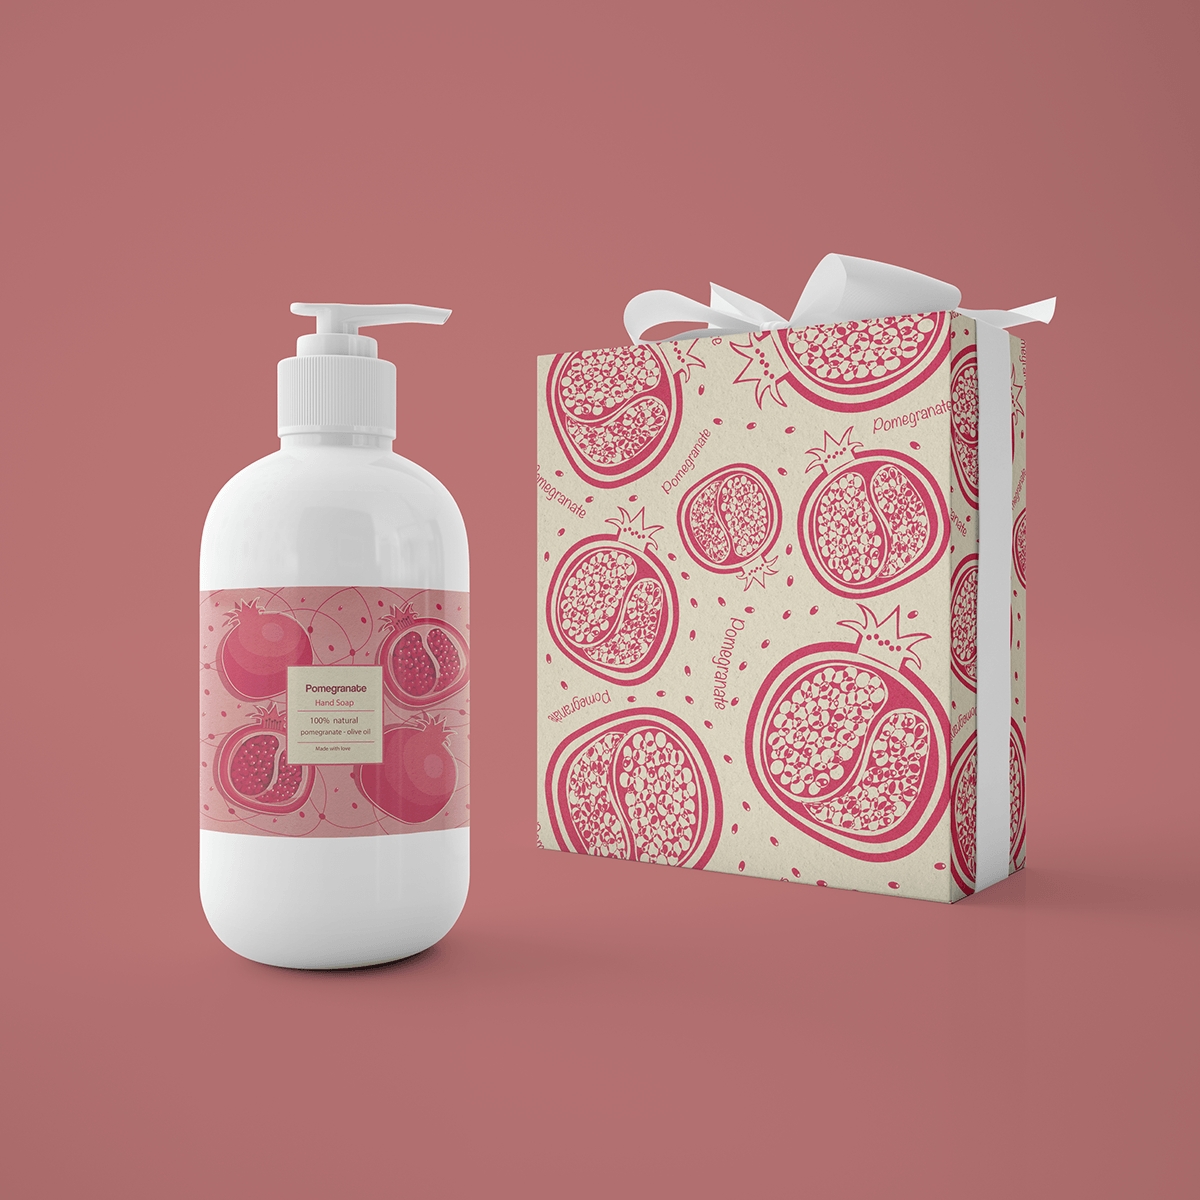 design brand identity adobe illustrator vector ILLUSTRATION  pomegranate packing box cosmetics Fruit